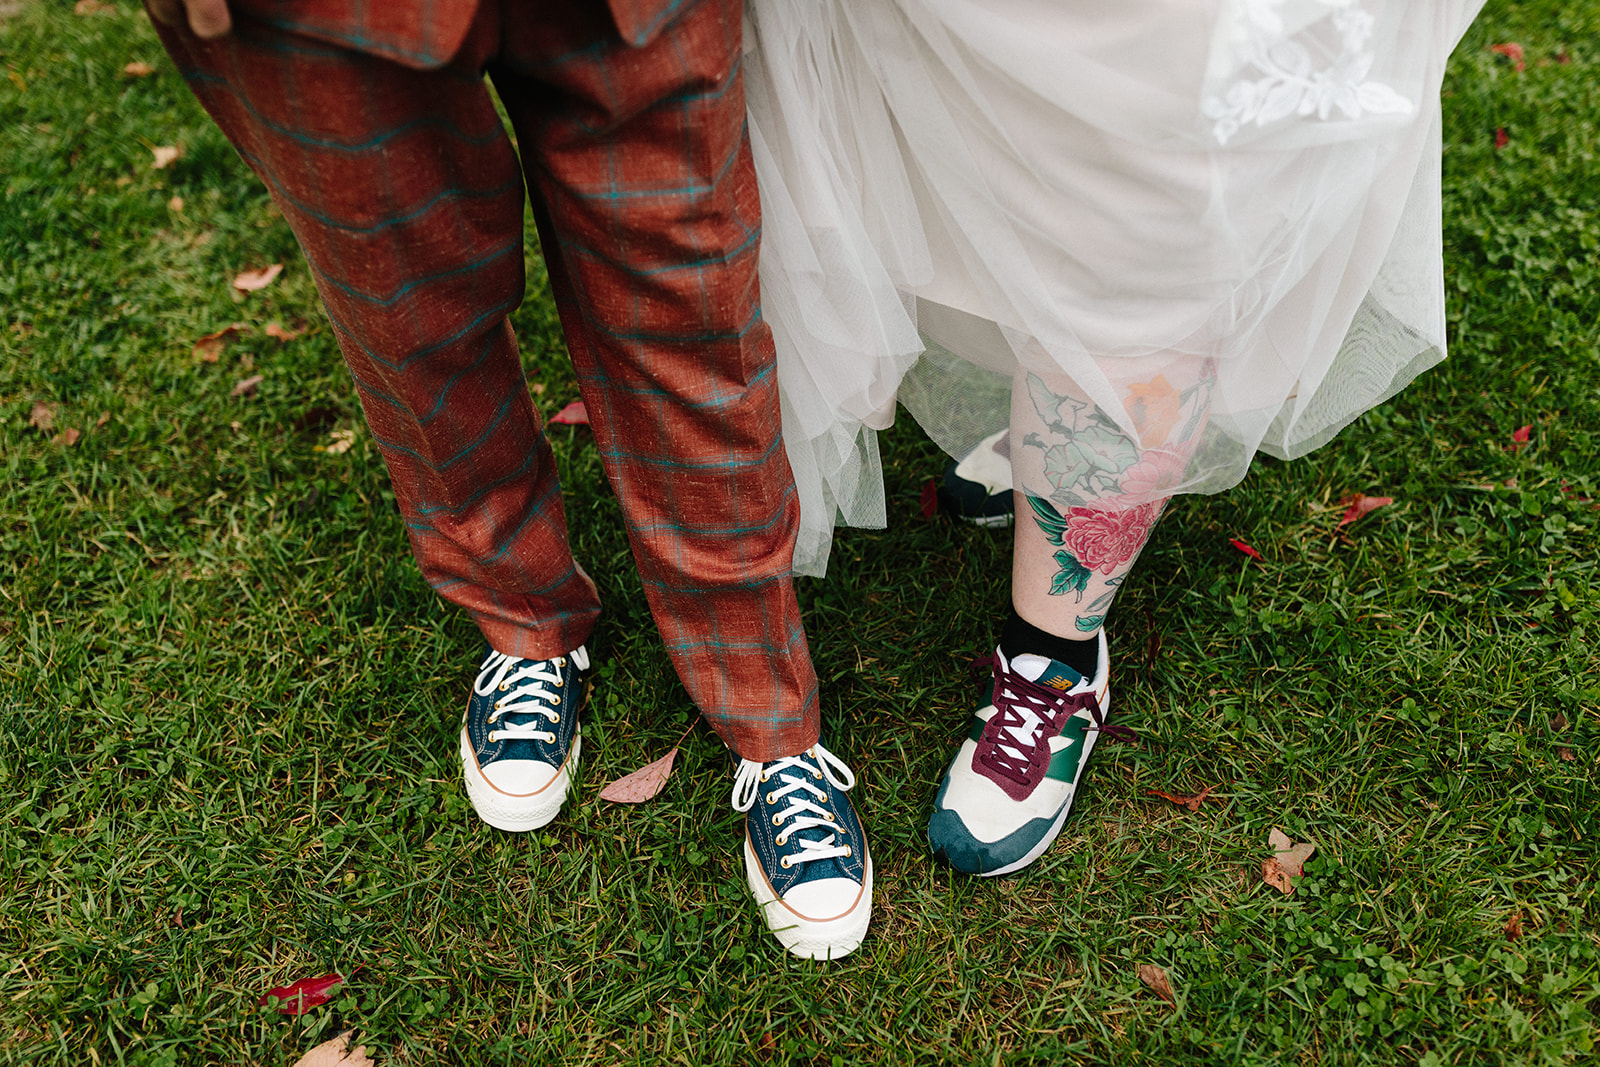 gym shoes with wedding attire